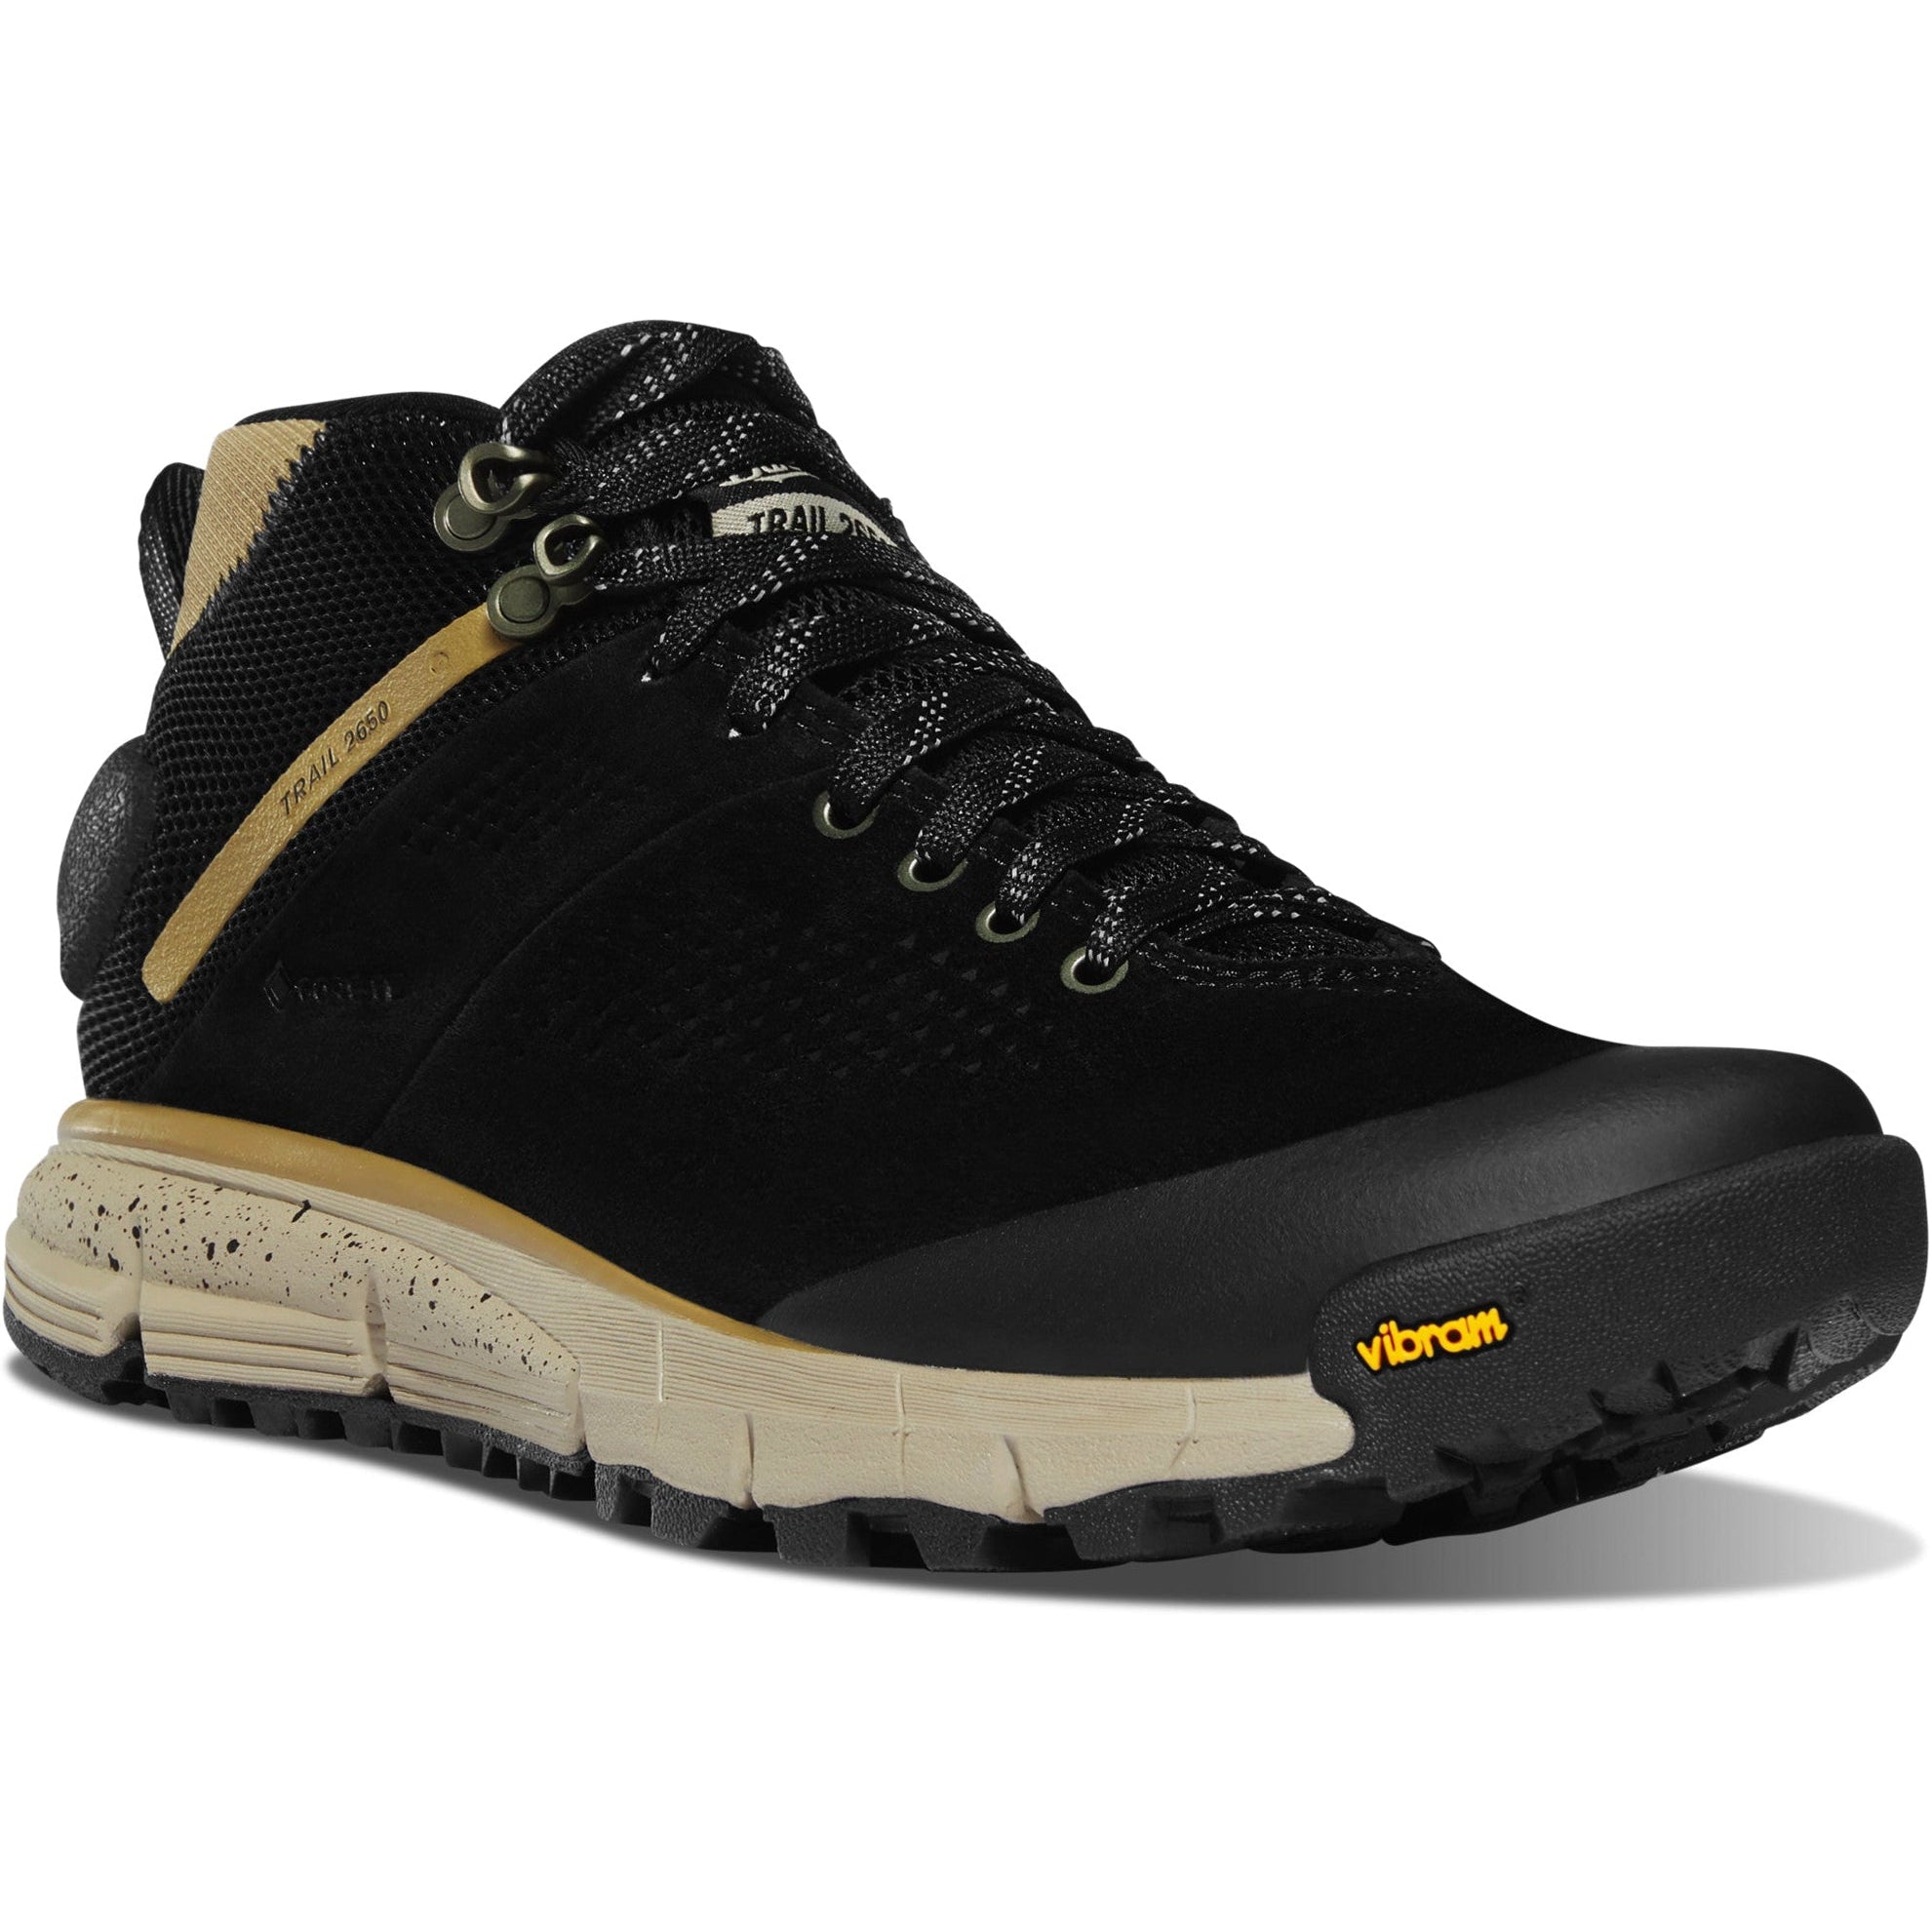 Danner Women's Trail 2650 GTX Mid 4" WP Hiker Shoe - Black - 61251 5 / Medium / Black - Overlook Boots